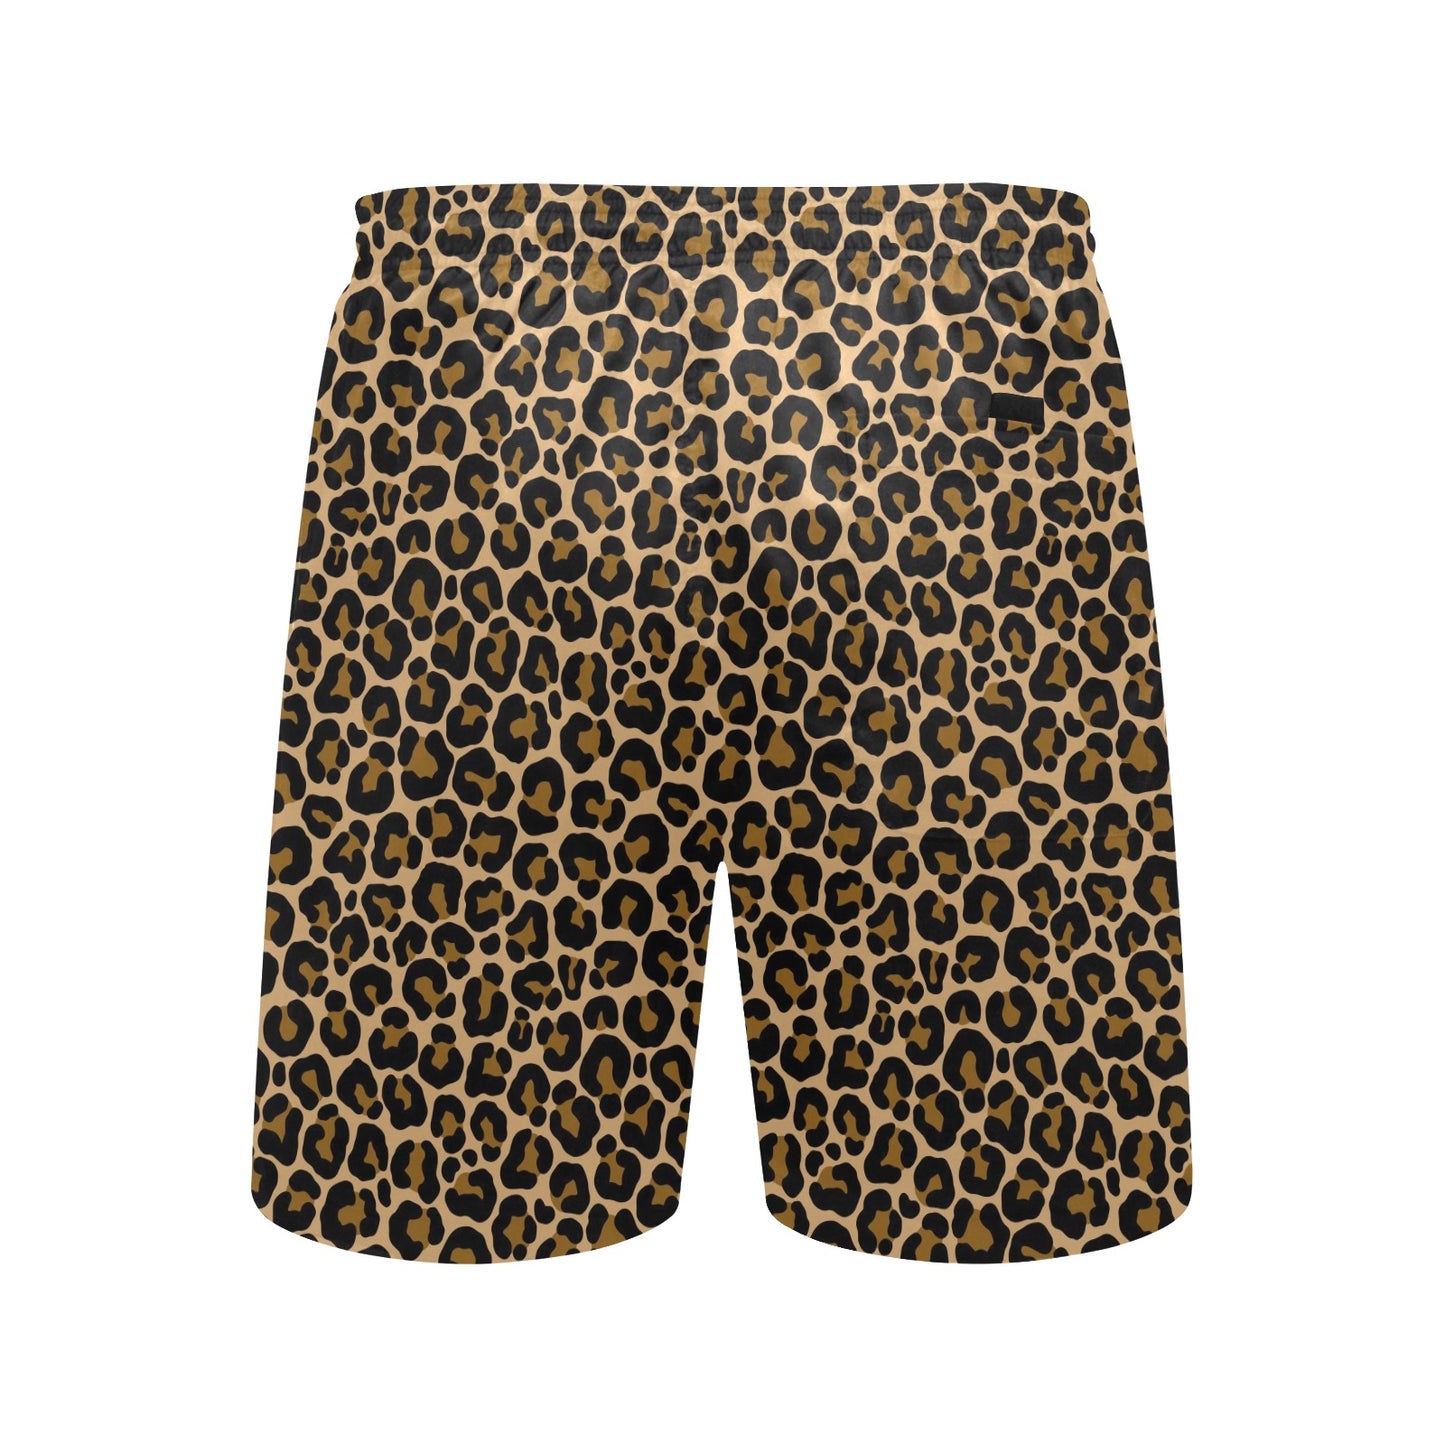 Leopard Men Swim Trunks, Mid Length Shorts Animal Print Beach Pockets Mesh Lining Drawstring Boys Casual Bathing Suit Plus Size Swimwear